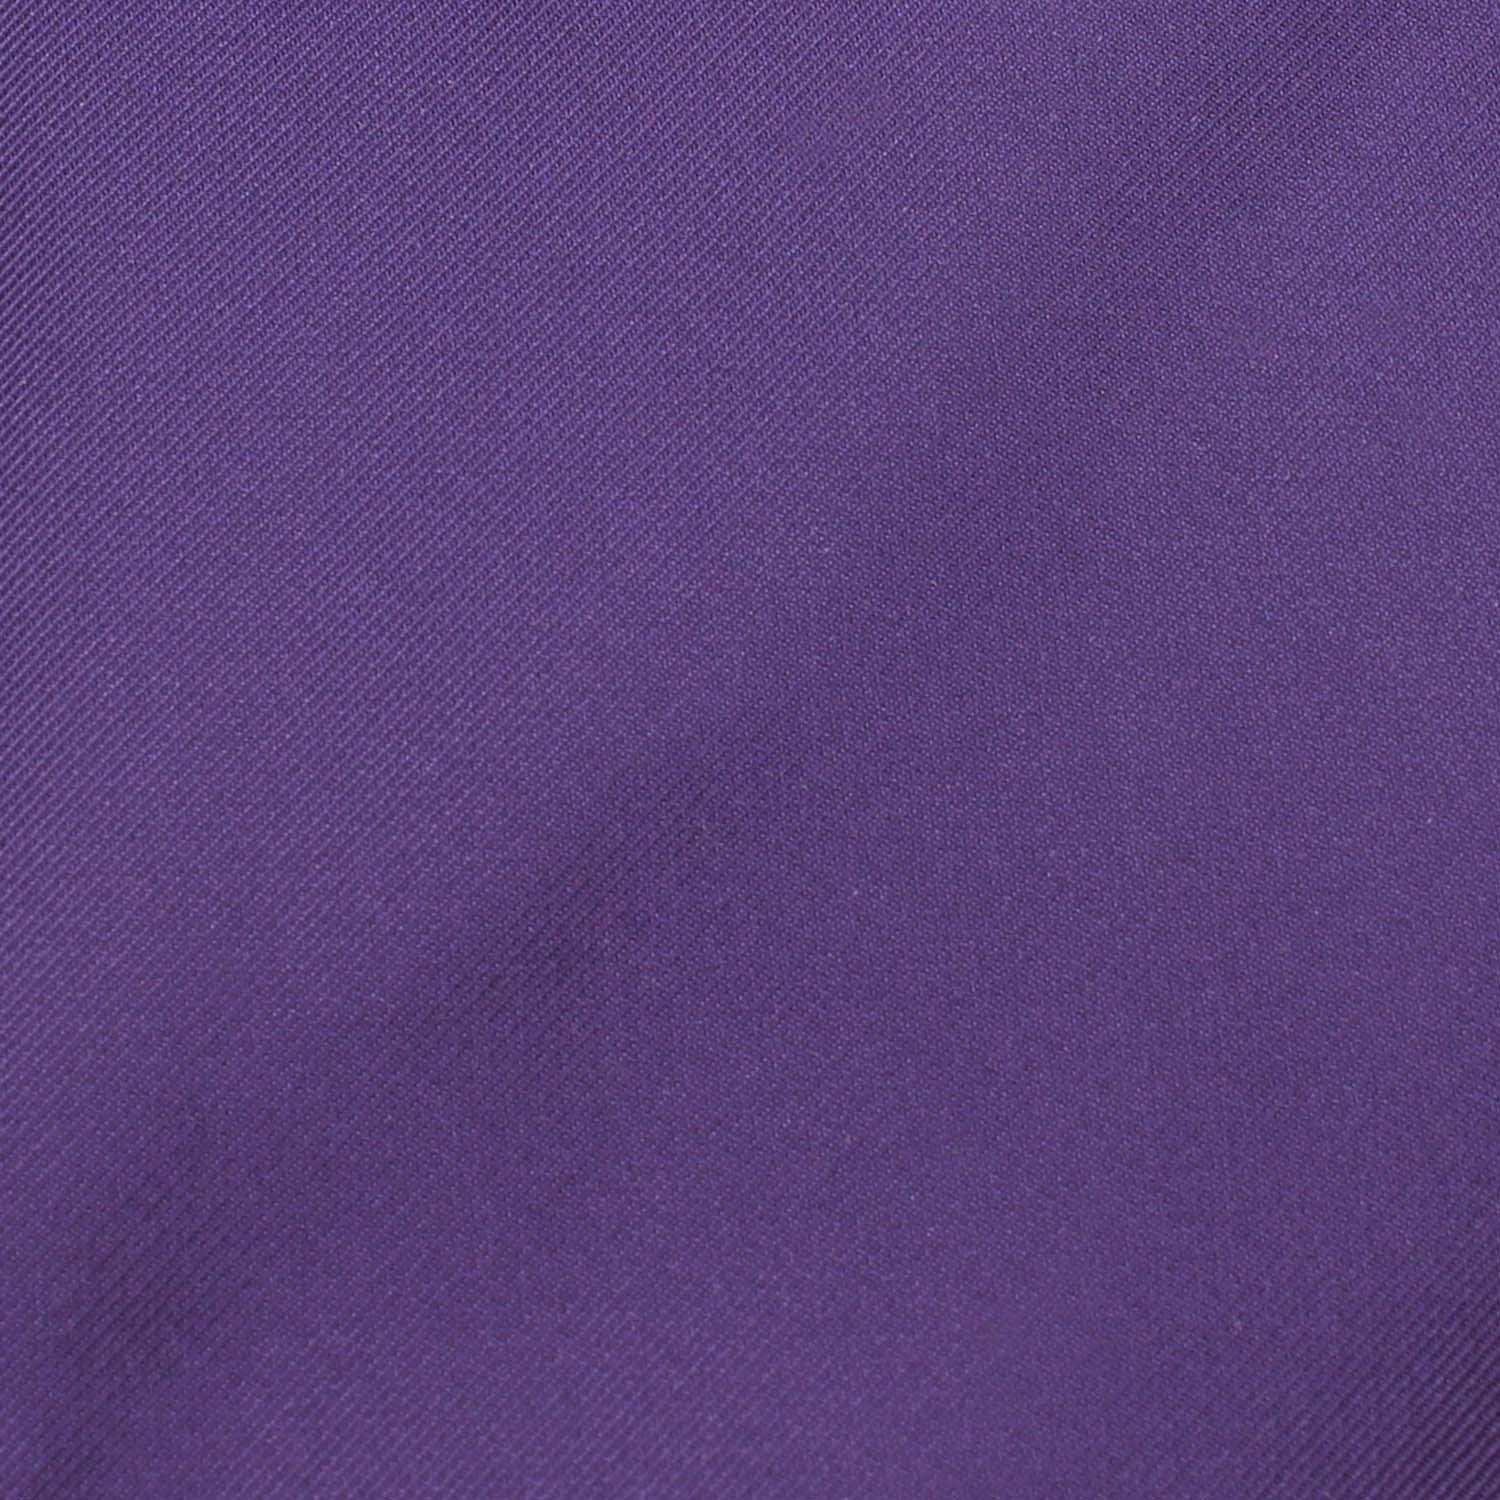 Royal Purple Fabric Skinny Tie X081